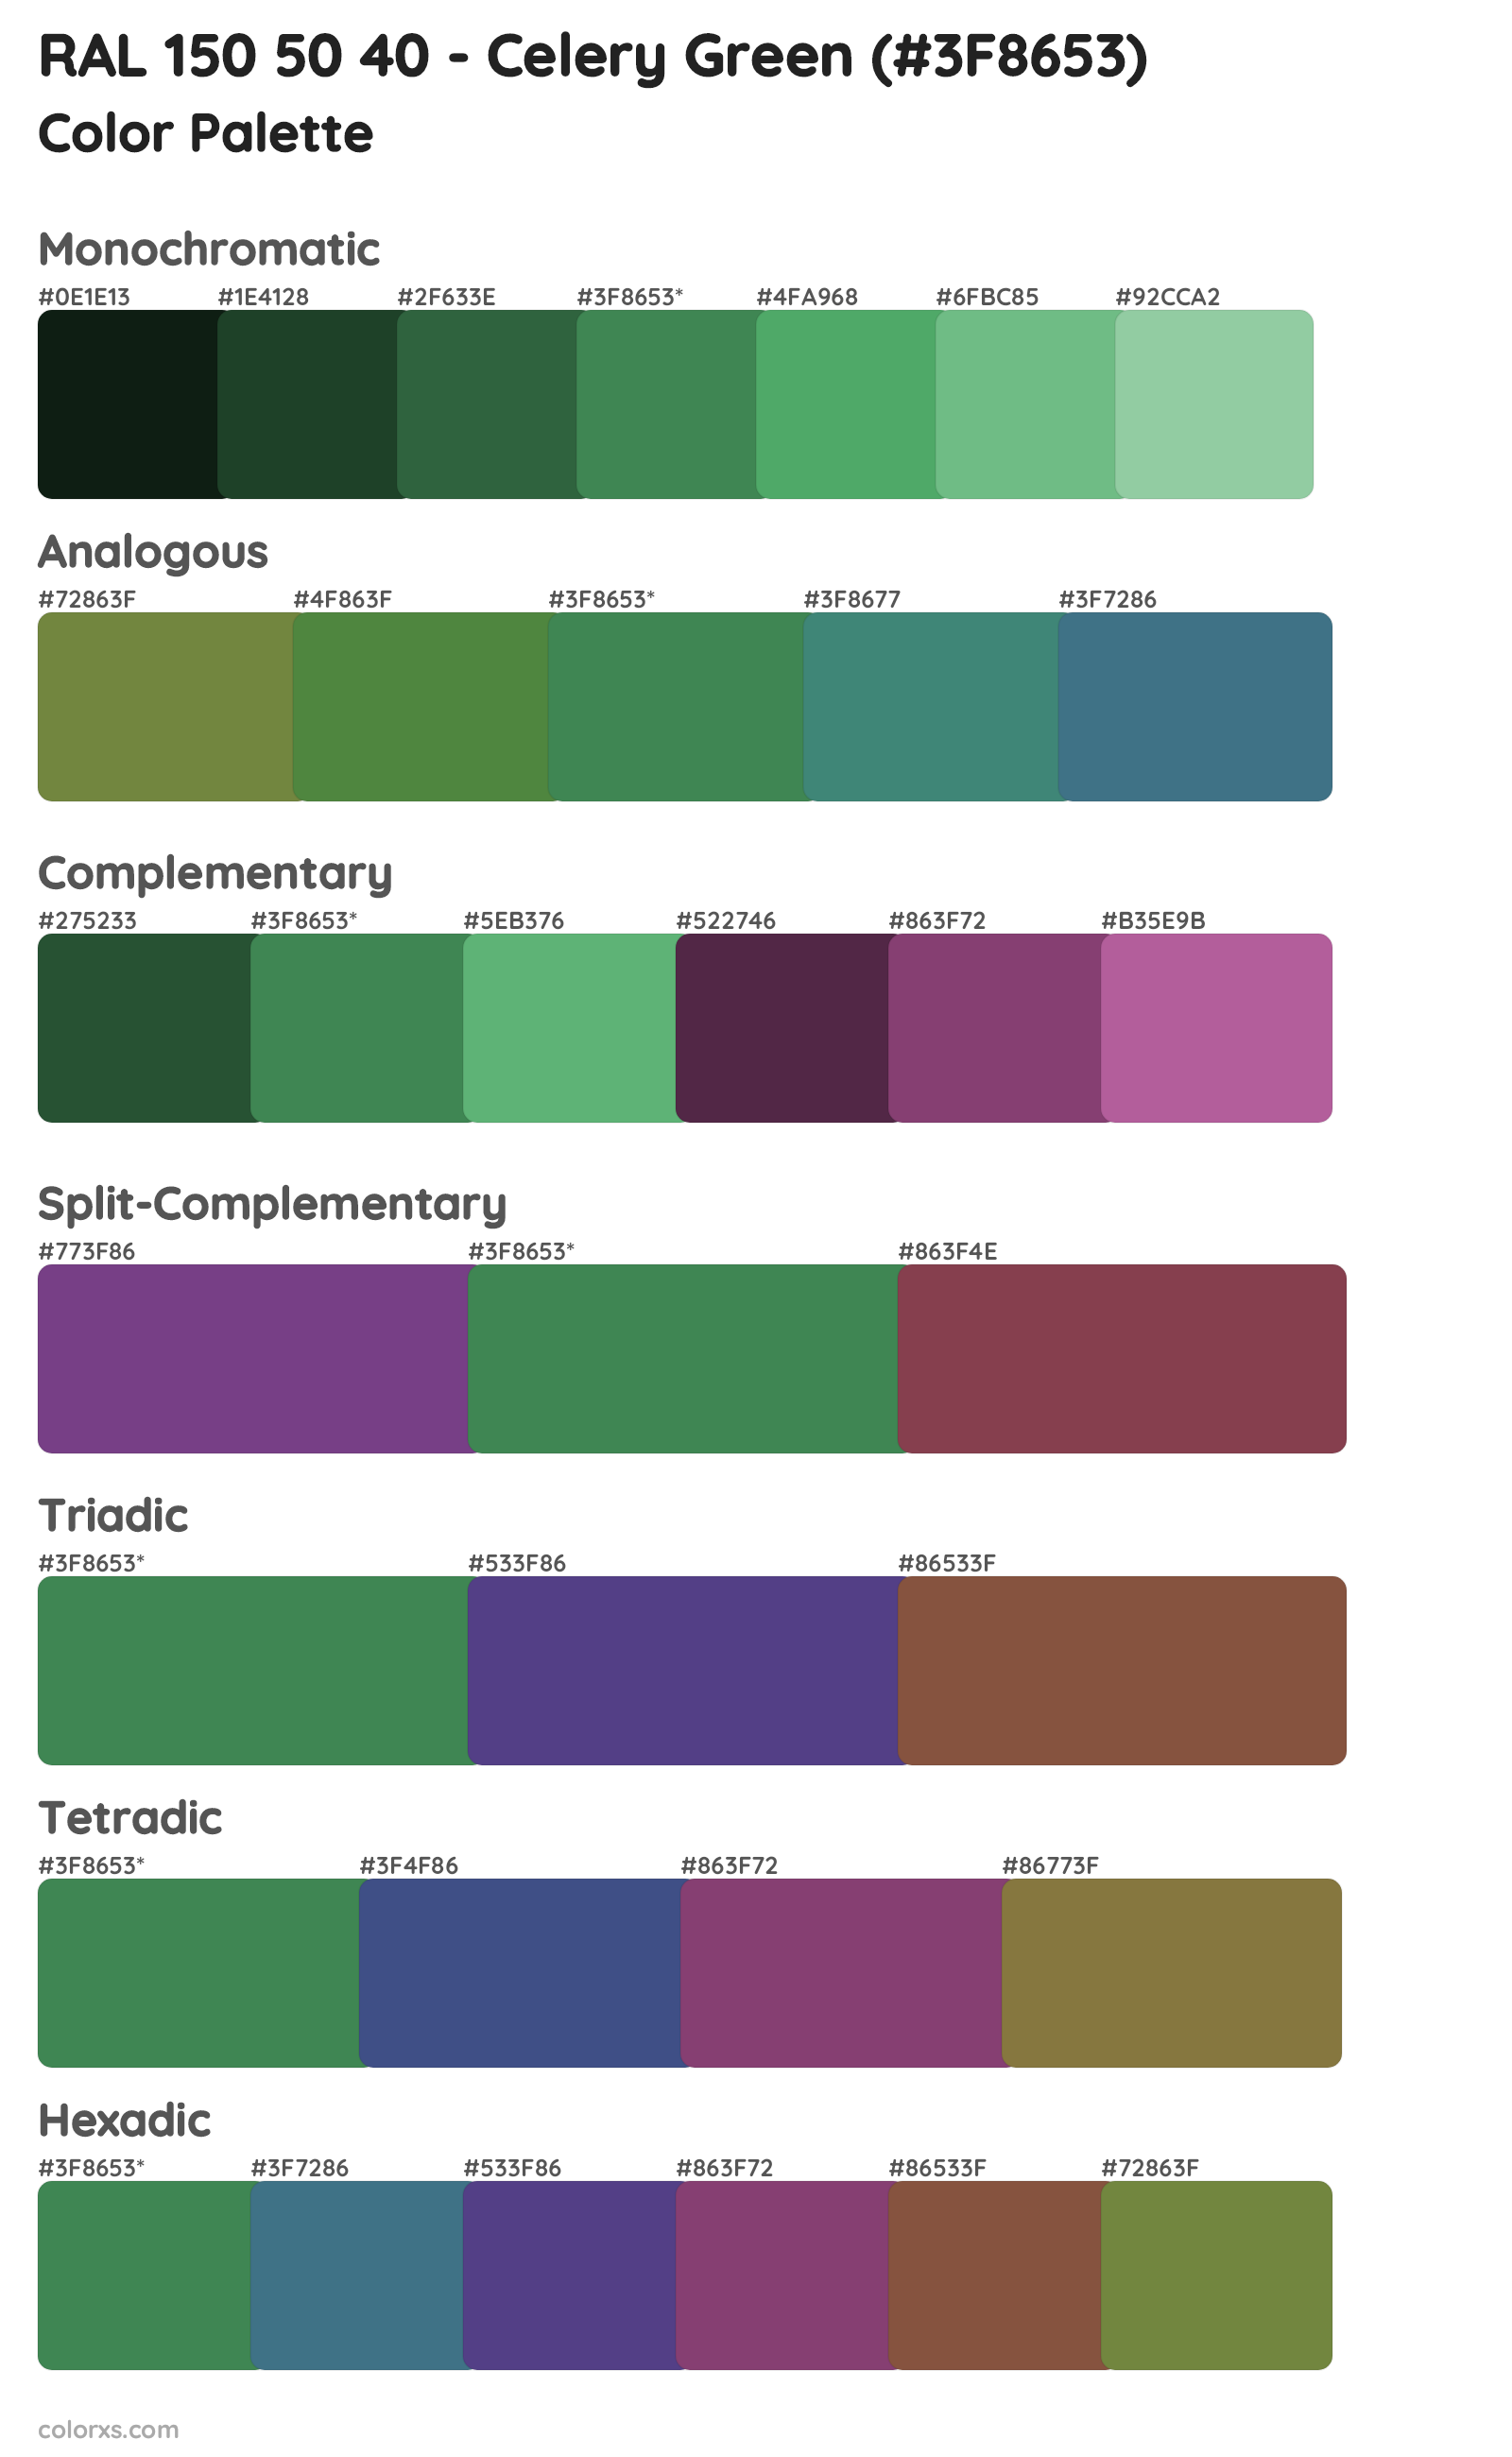 RAL 150 50 40 - Celery Green Color Scheme Palettes